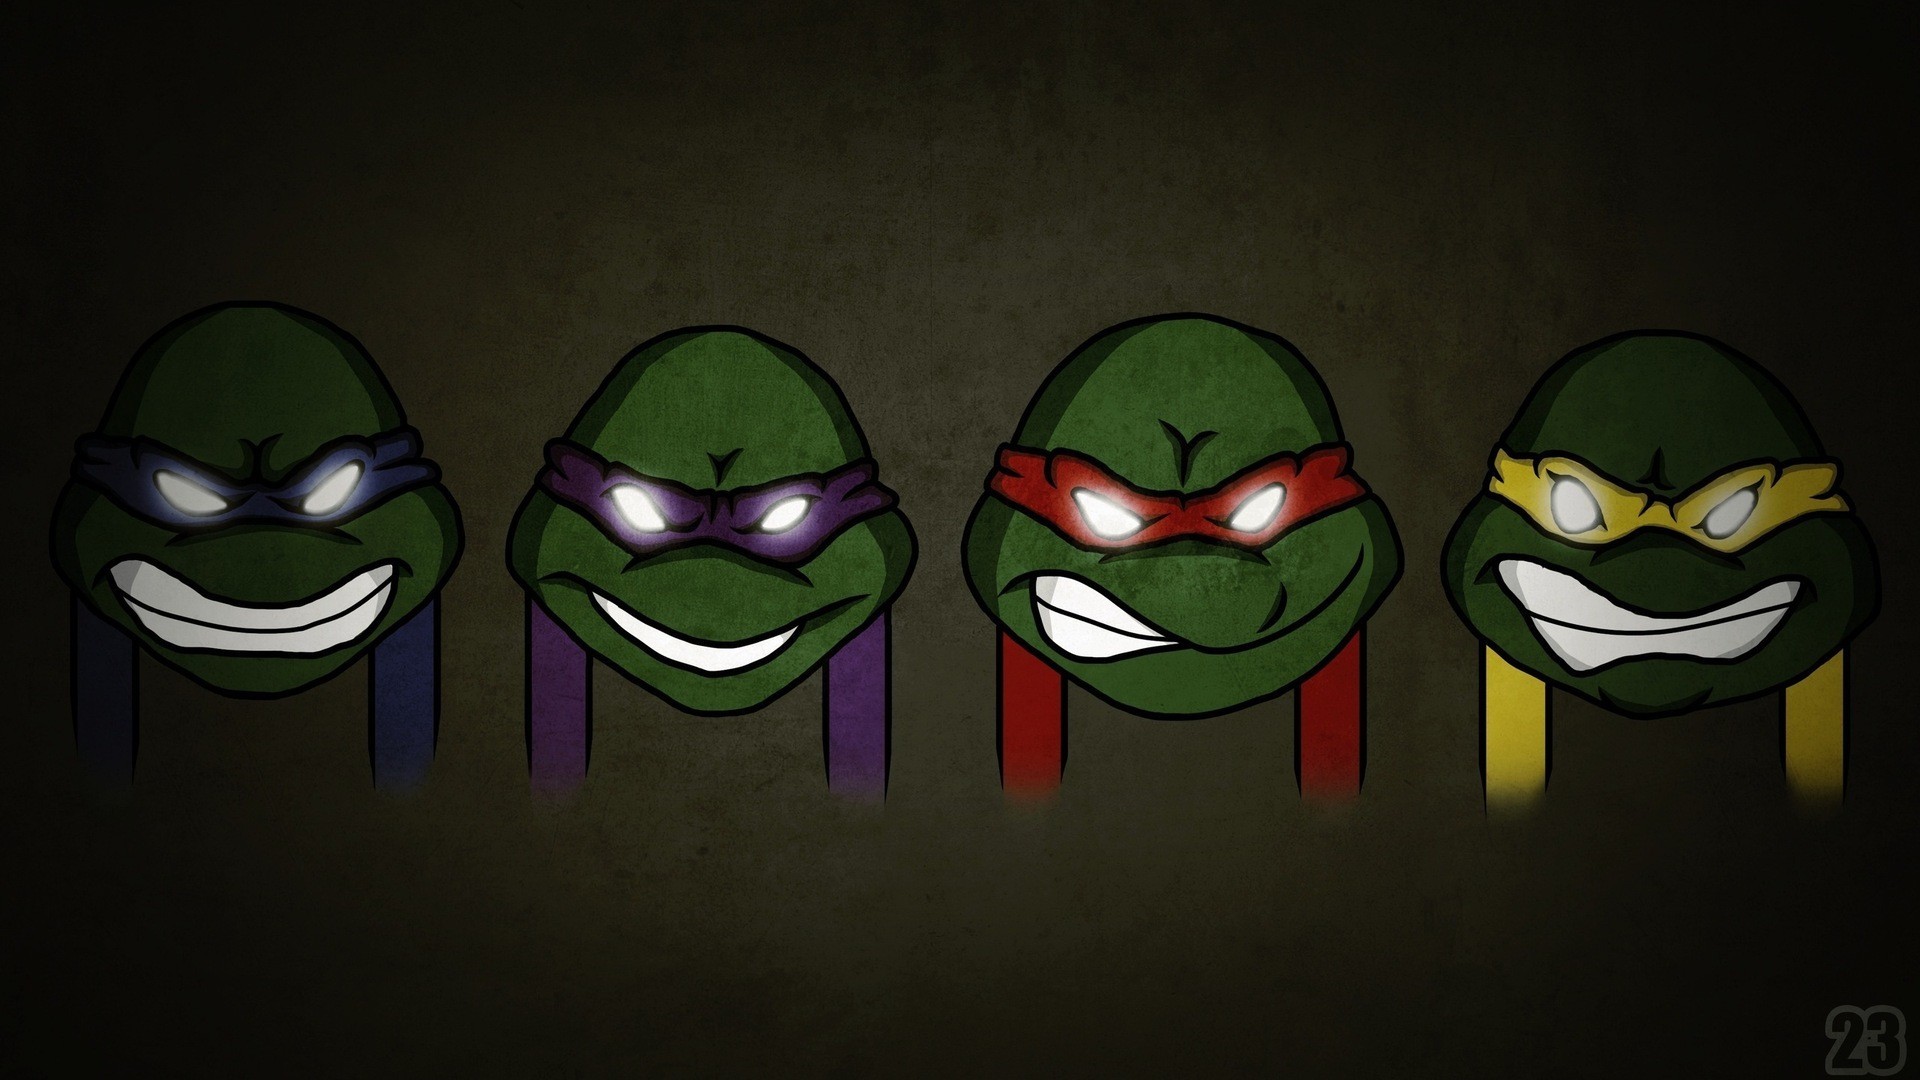 Leonardo Donatello Michelangelo Teenage Mutant Ninja Turtles Raphael Wallpapers Hd Desktop And Mobile Backgrounds